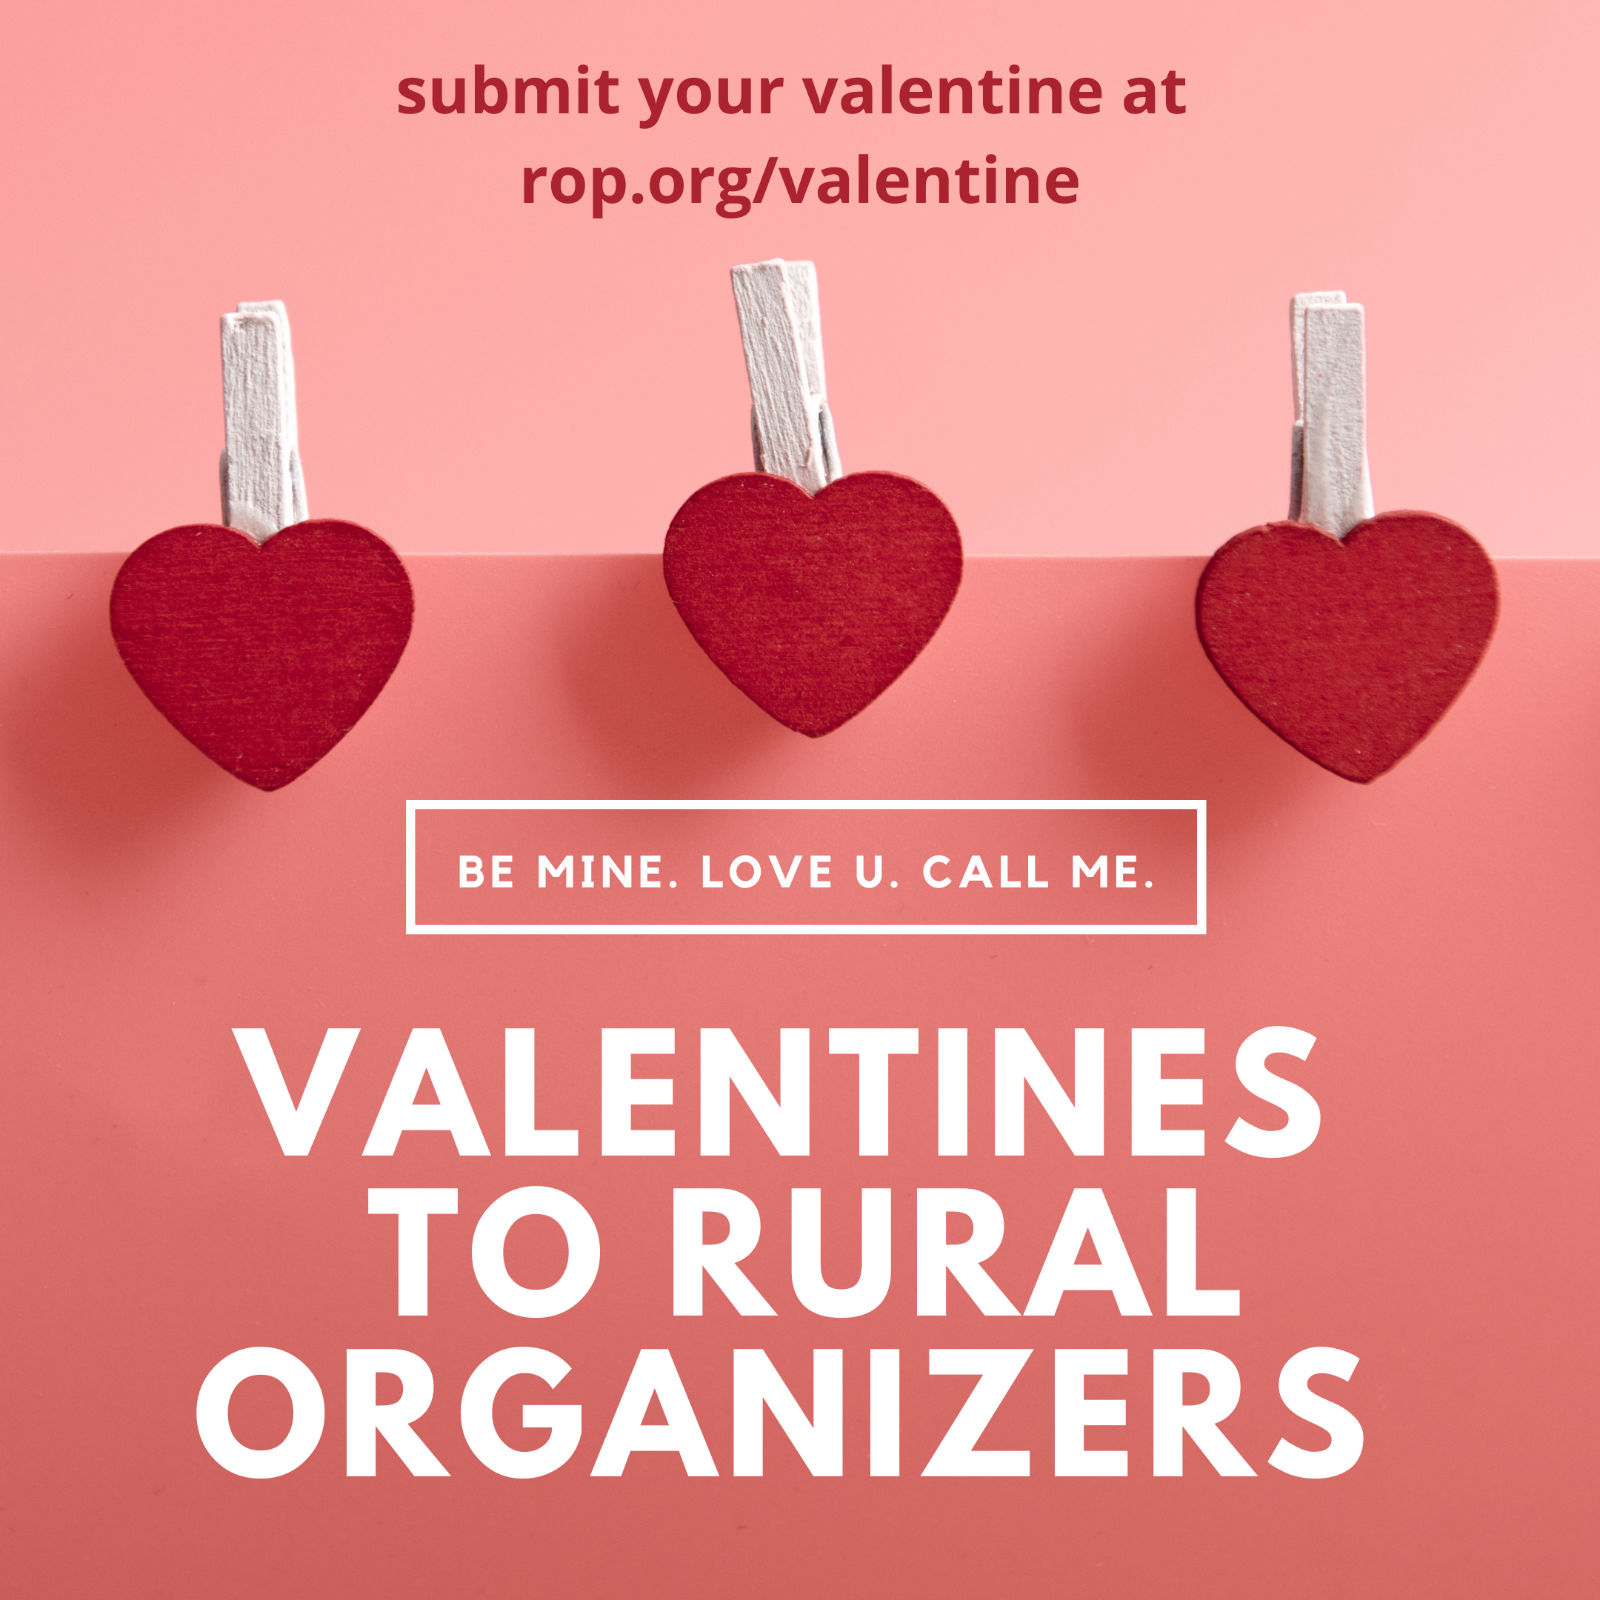 Отправьте свою валентинку на rop.org/valentine.